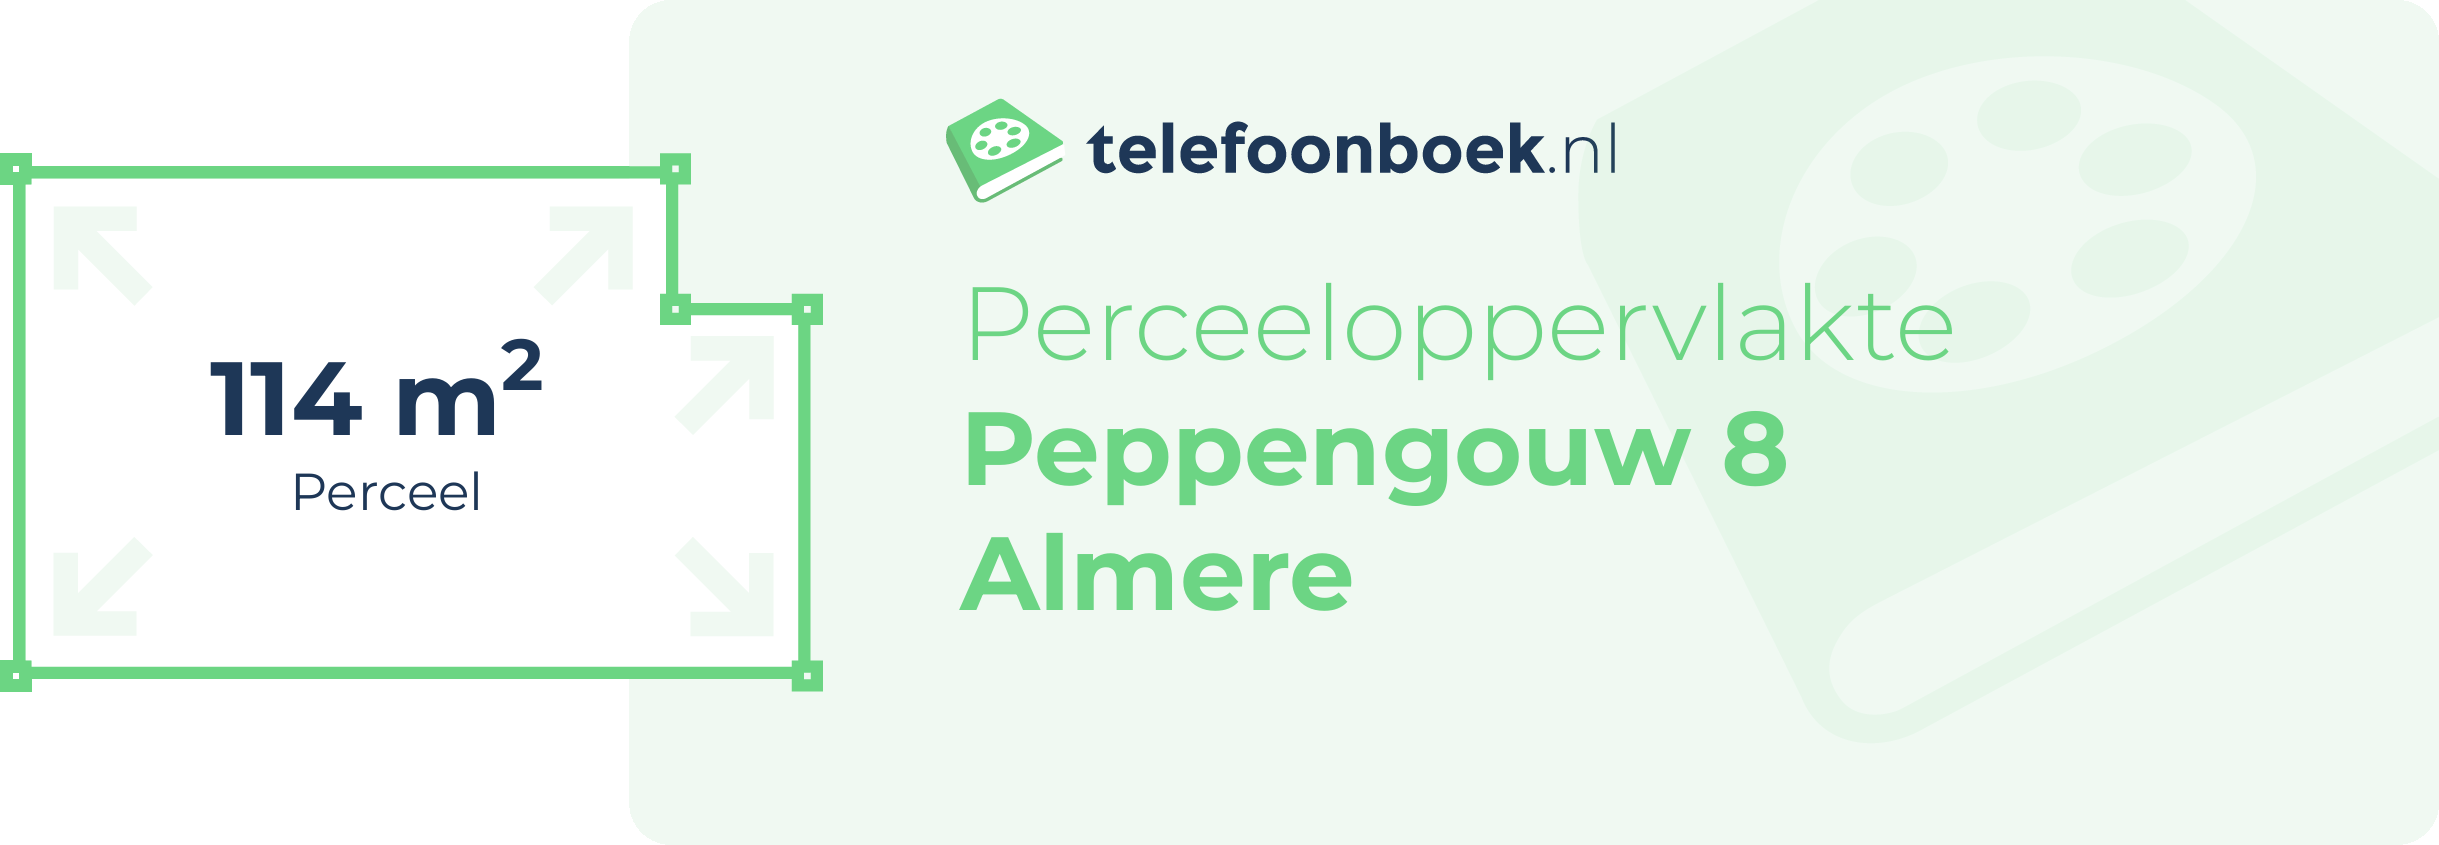 Perceeloppervlakte Peppengouw 8 Almere